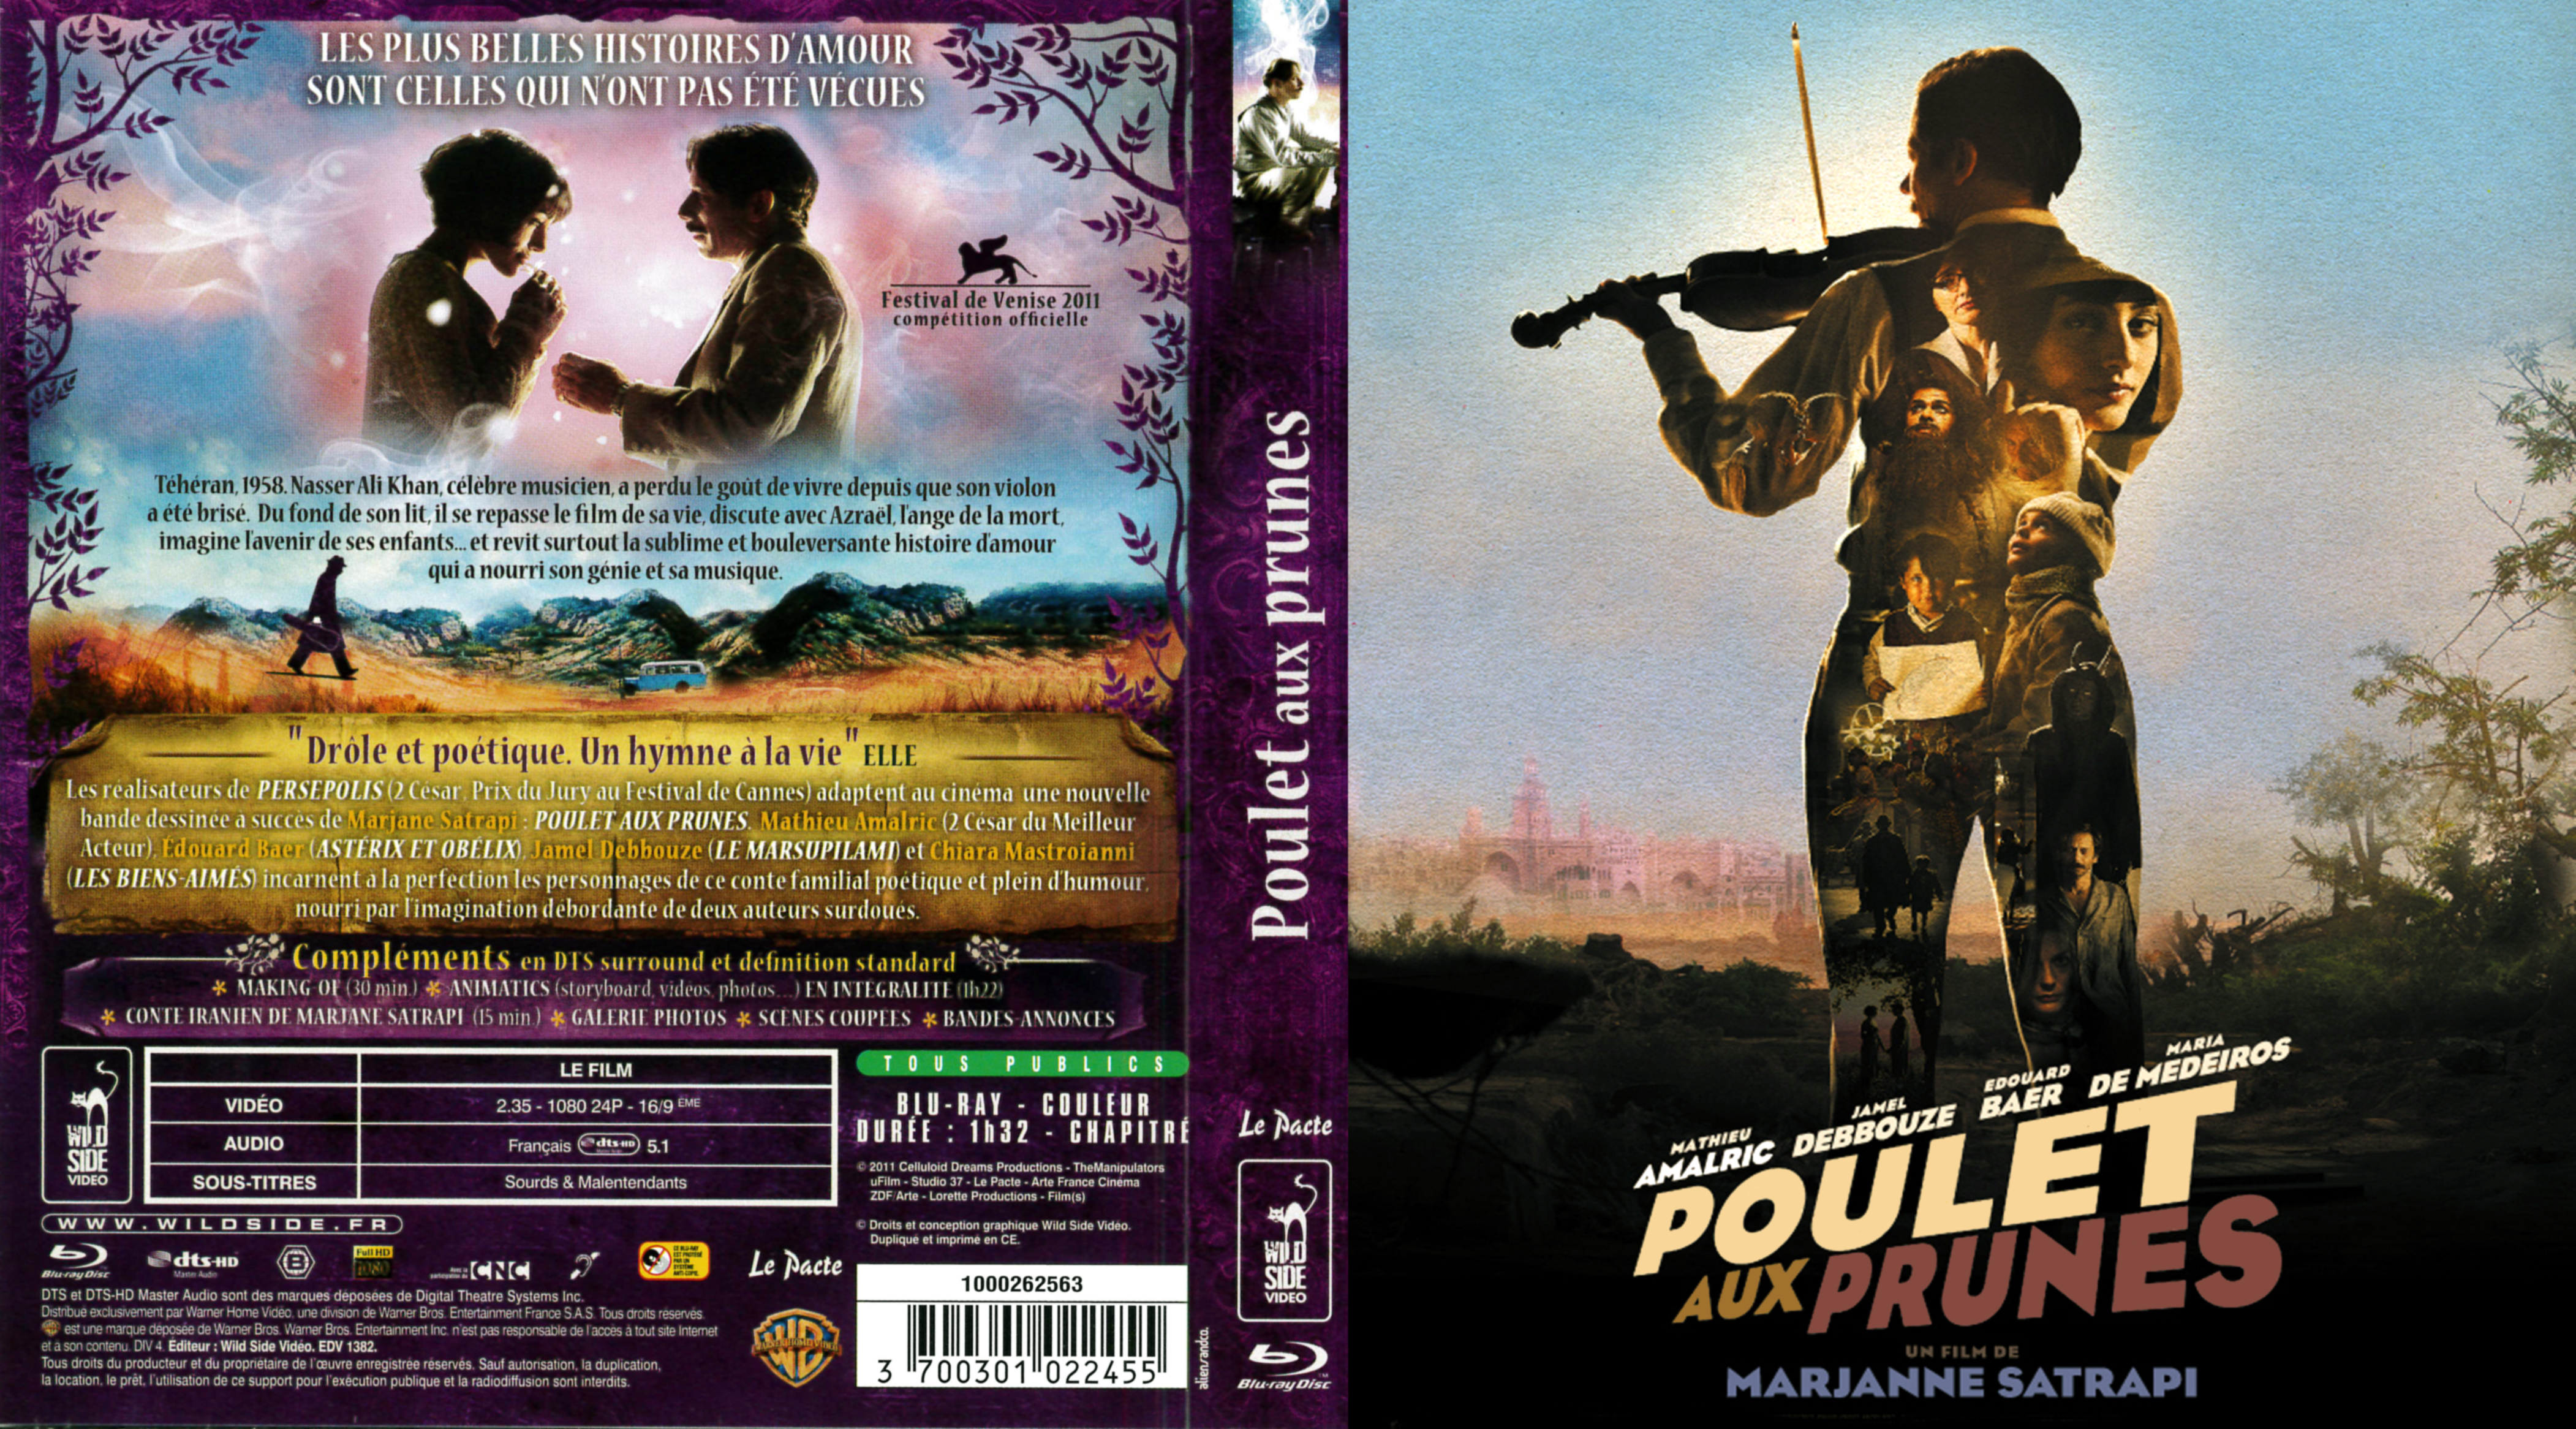 Jaquette DVD Poulet aux prunes (2011) custom (BLU-RAY)